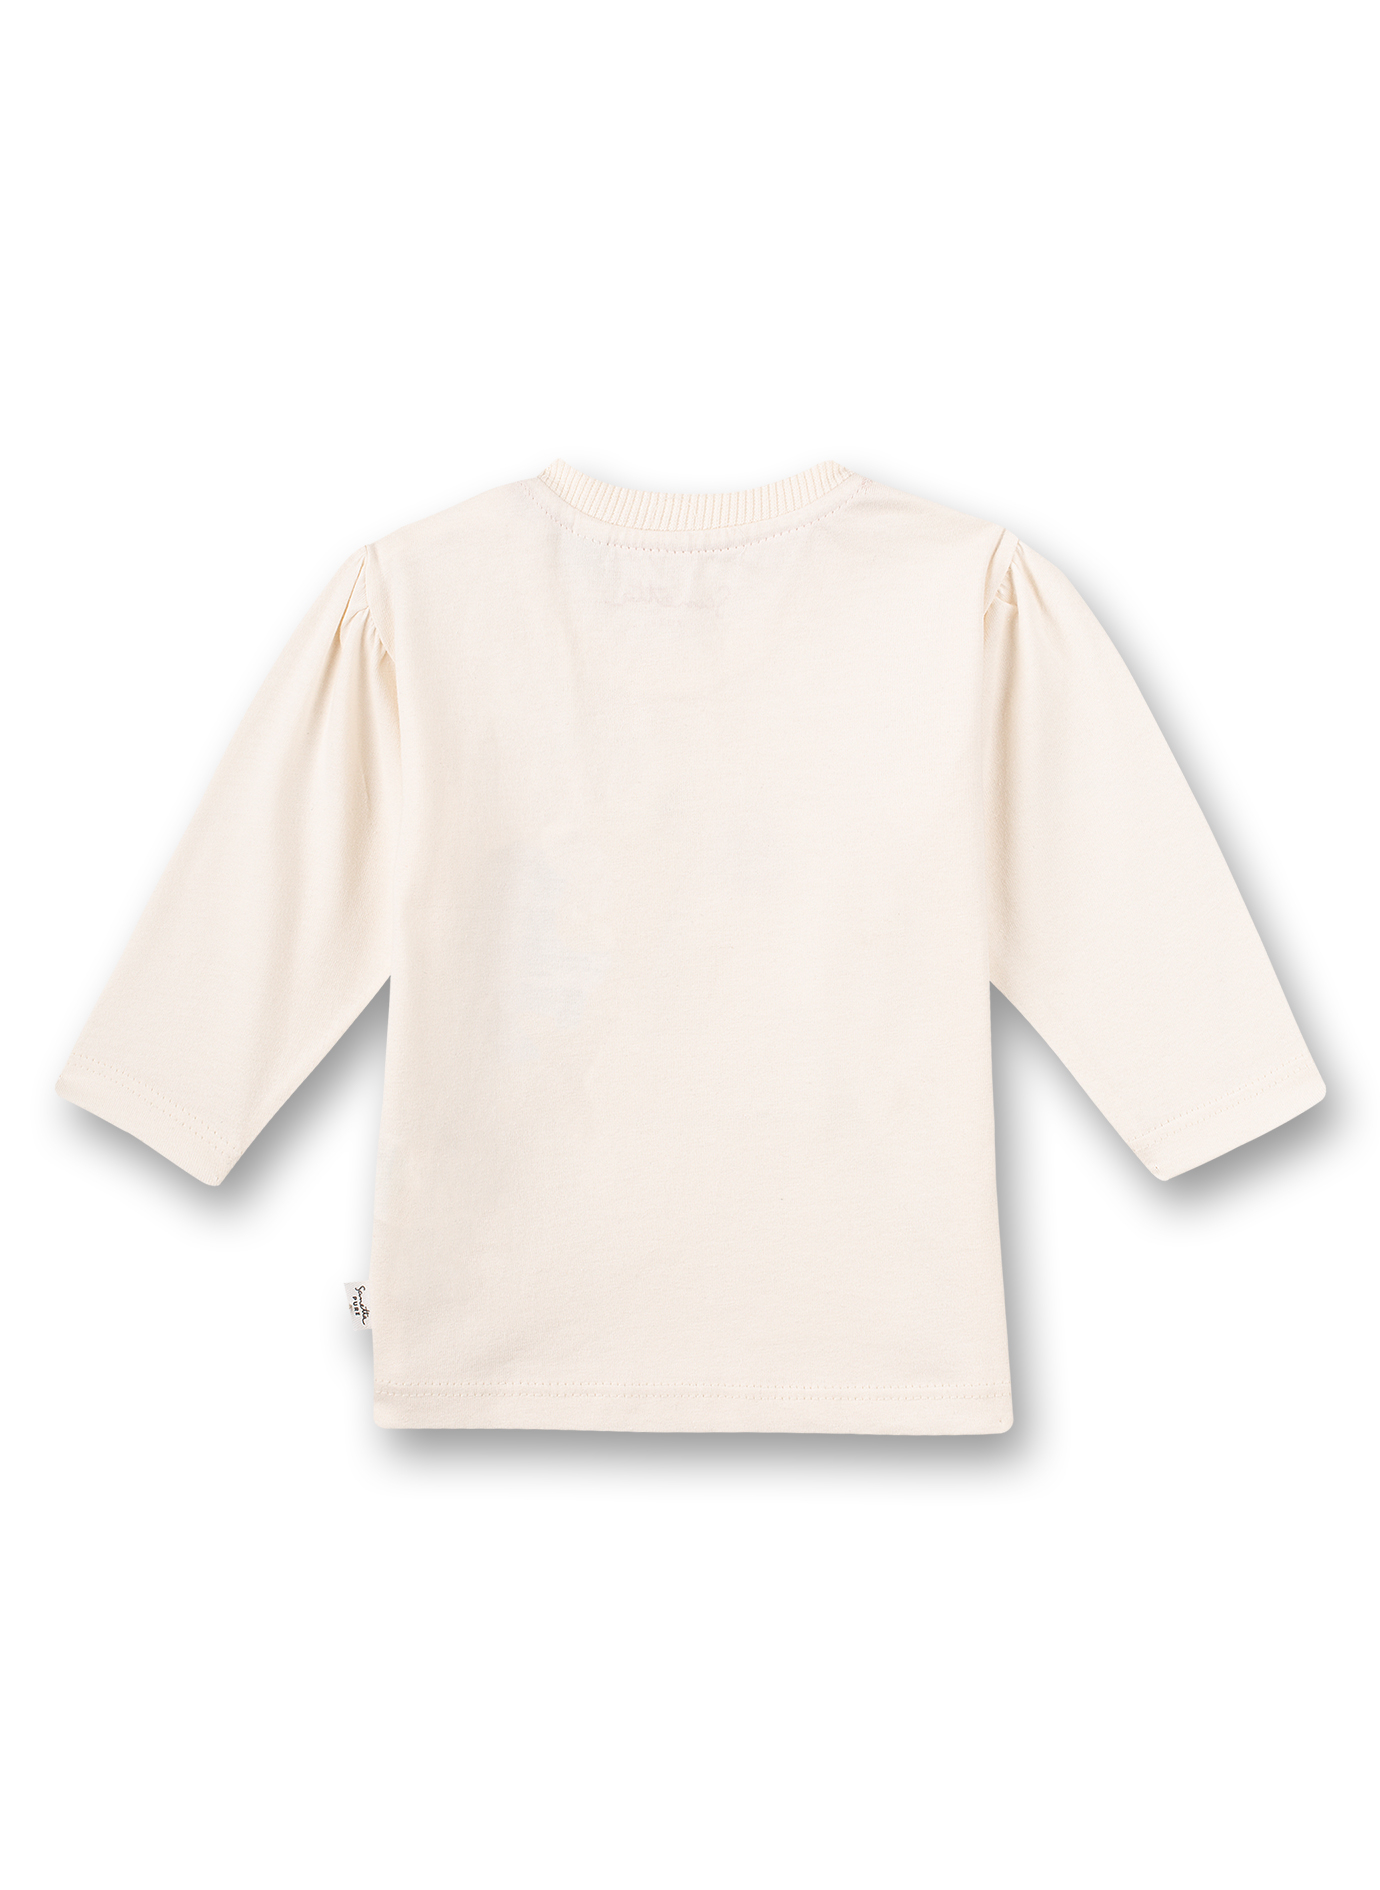 Mädchen-Shirt langarm Off-White